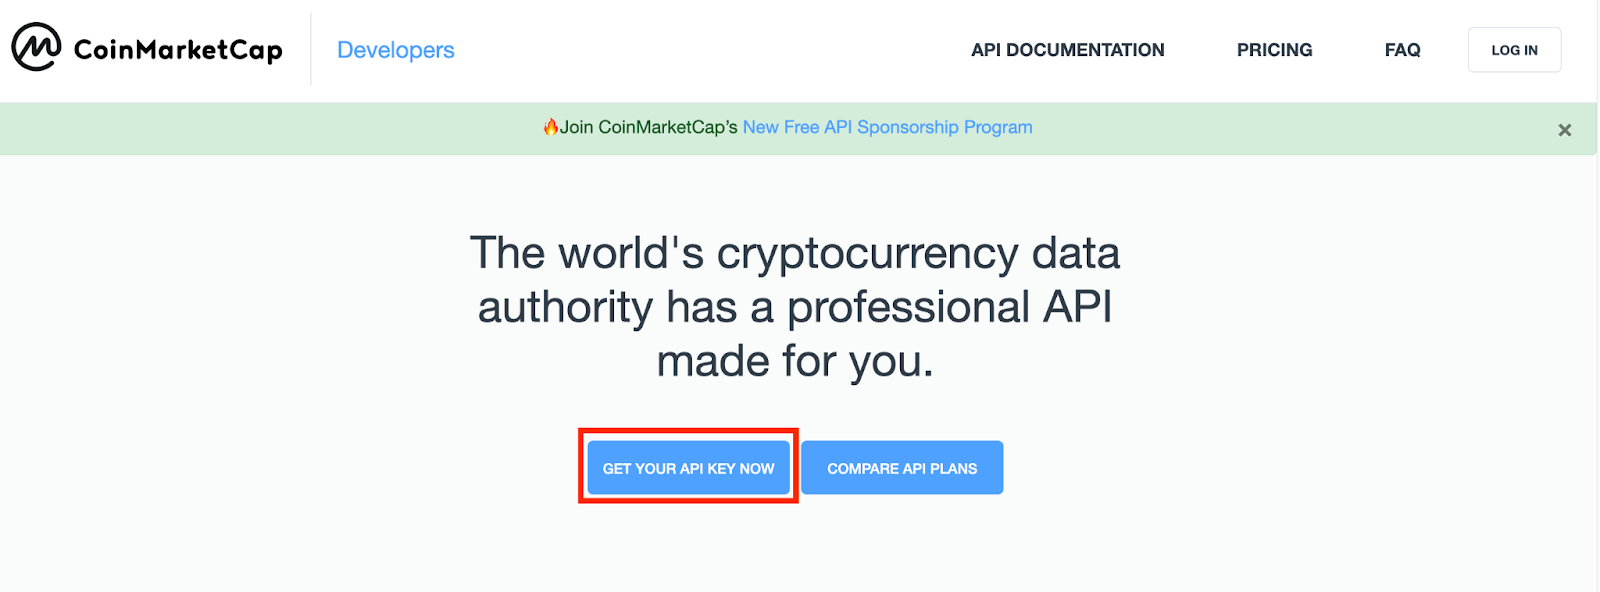 Coinmarketcap - Get API Key